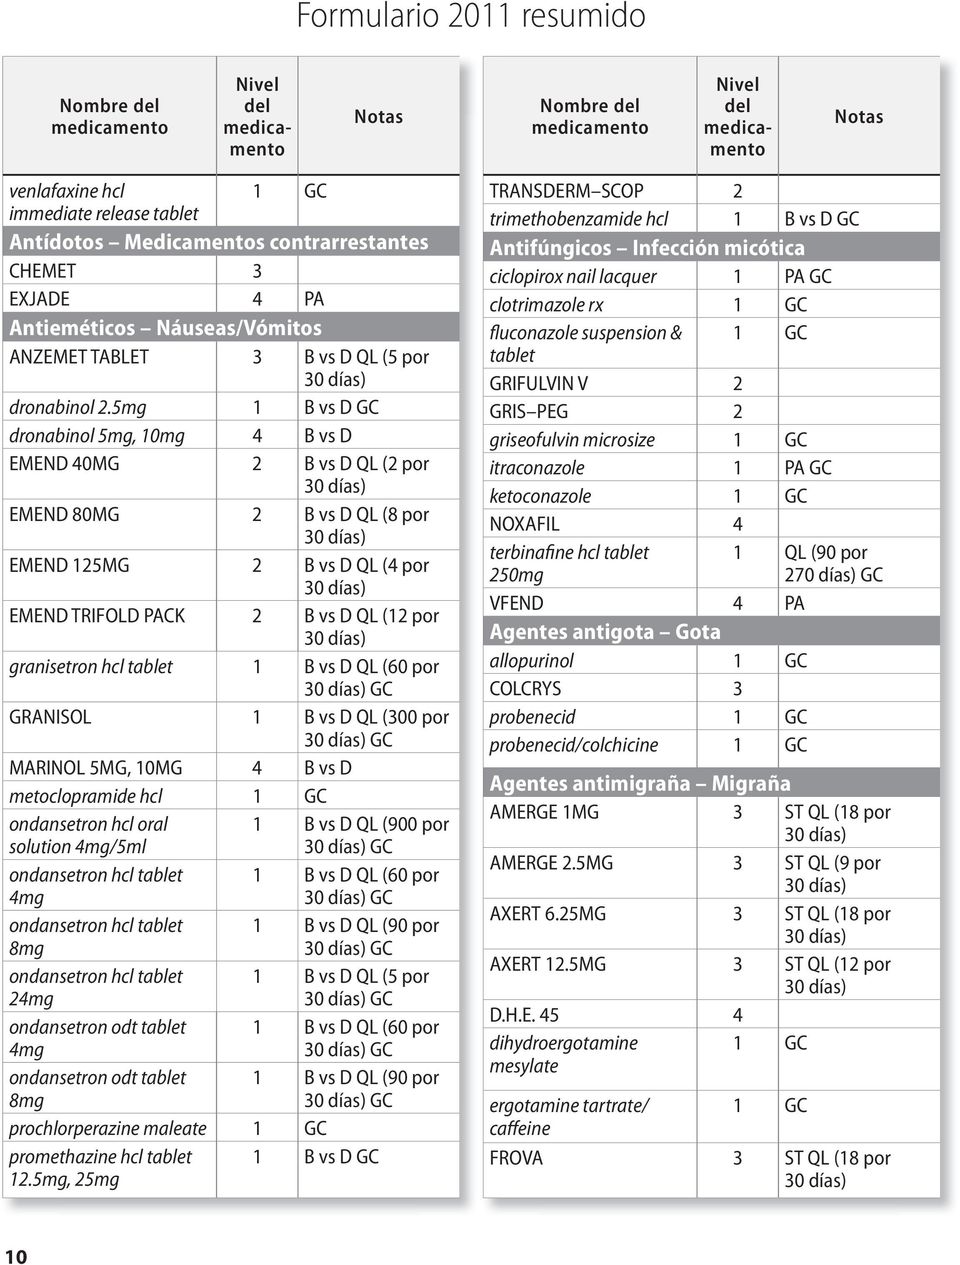 vs D QL (60 por GRANISOL 1 B vs D QL (300 por MARINOL 5MG, 10MG 4 B vs D metoclopramide hcl 1 ondansetron hcl oral solution 4mg/5ml 1 B vs D QL (900 por ondansetron hcl tablet 4mg 1 B vs D QL (60 por